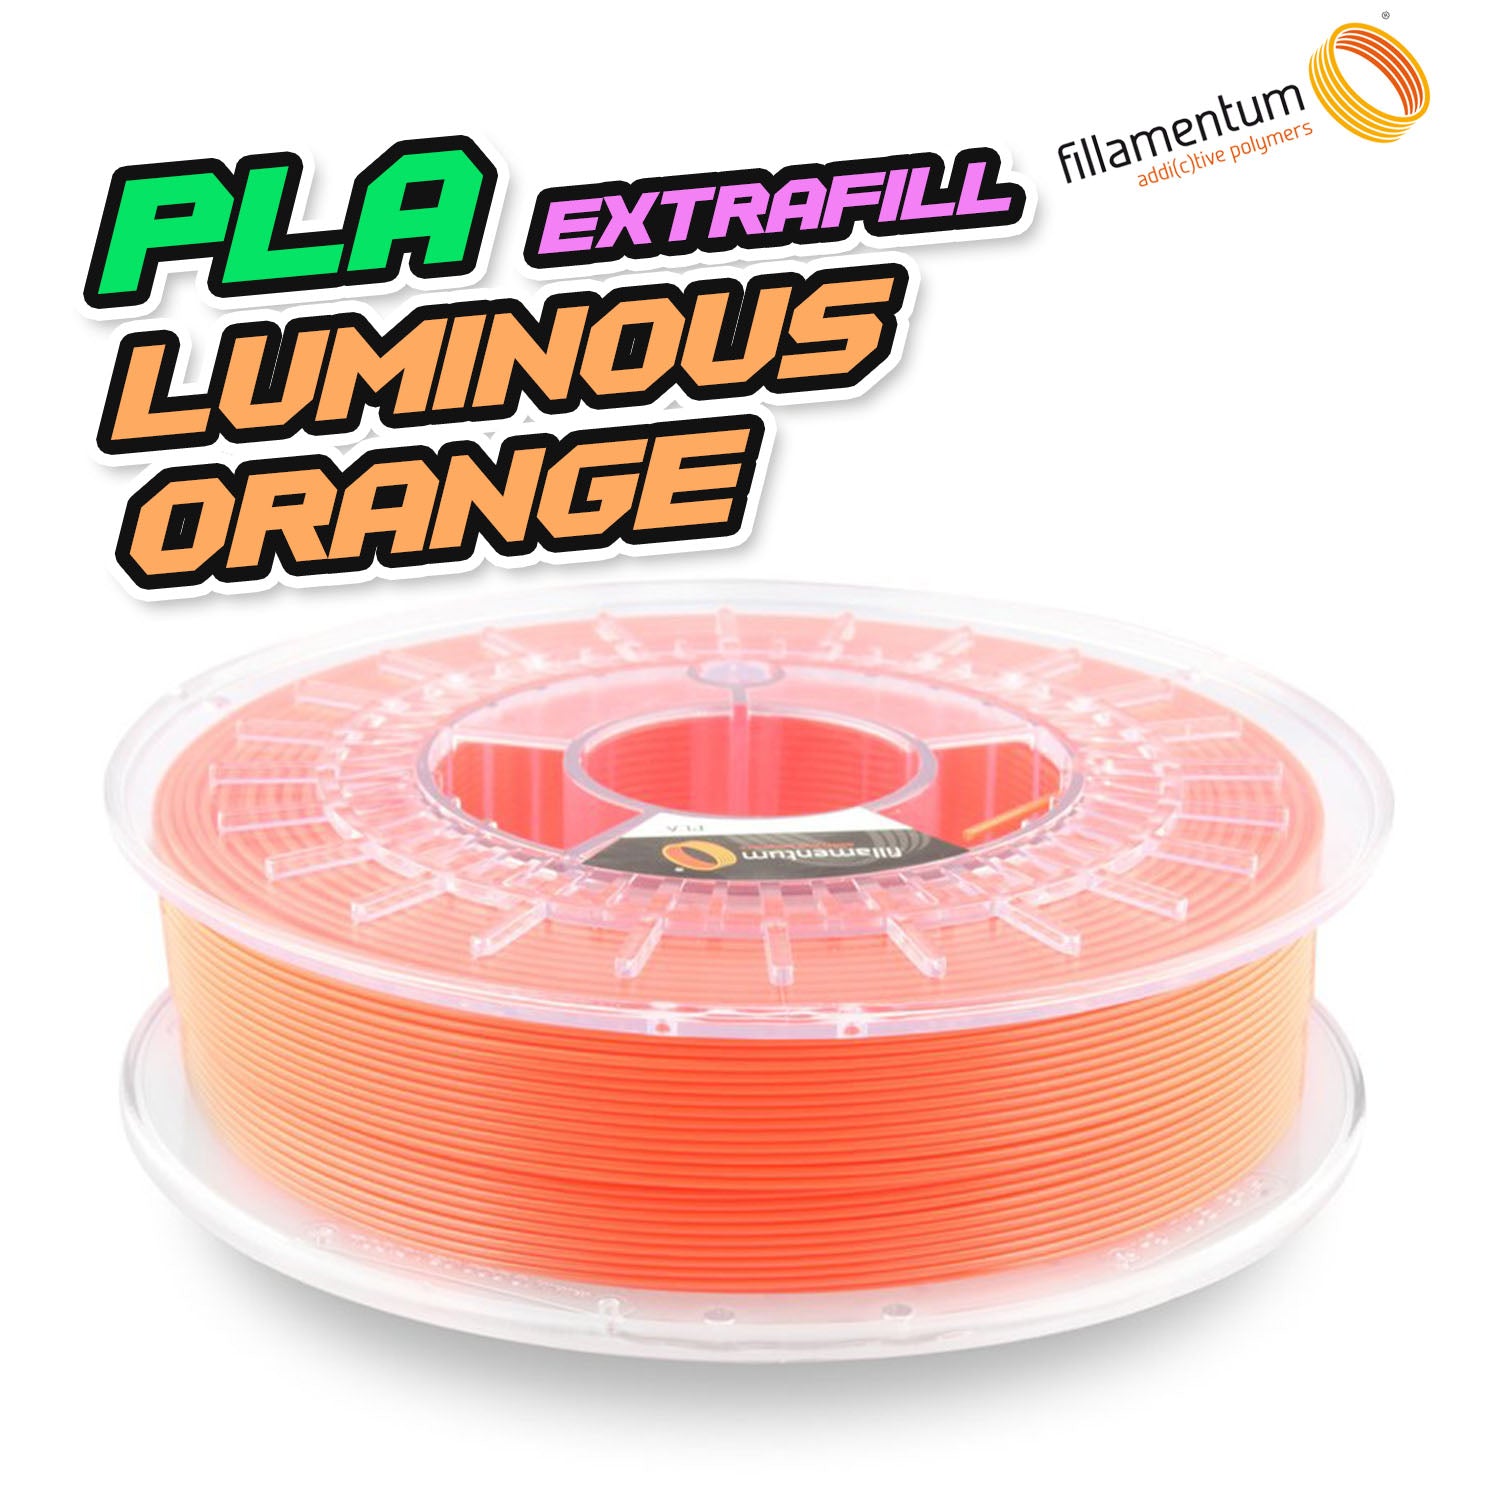 Fillamentum PLA Extrafill - Luminous Orange [1.75mm] (29,20€/Kg)